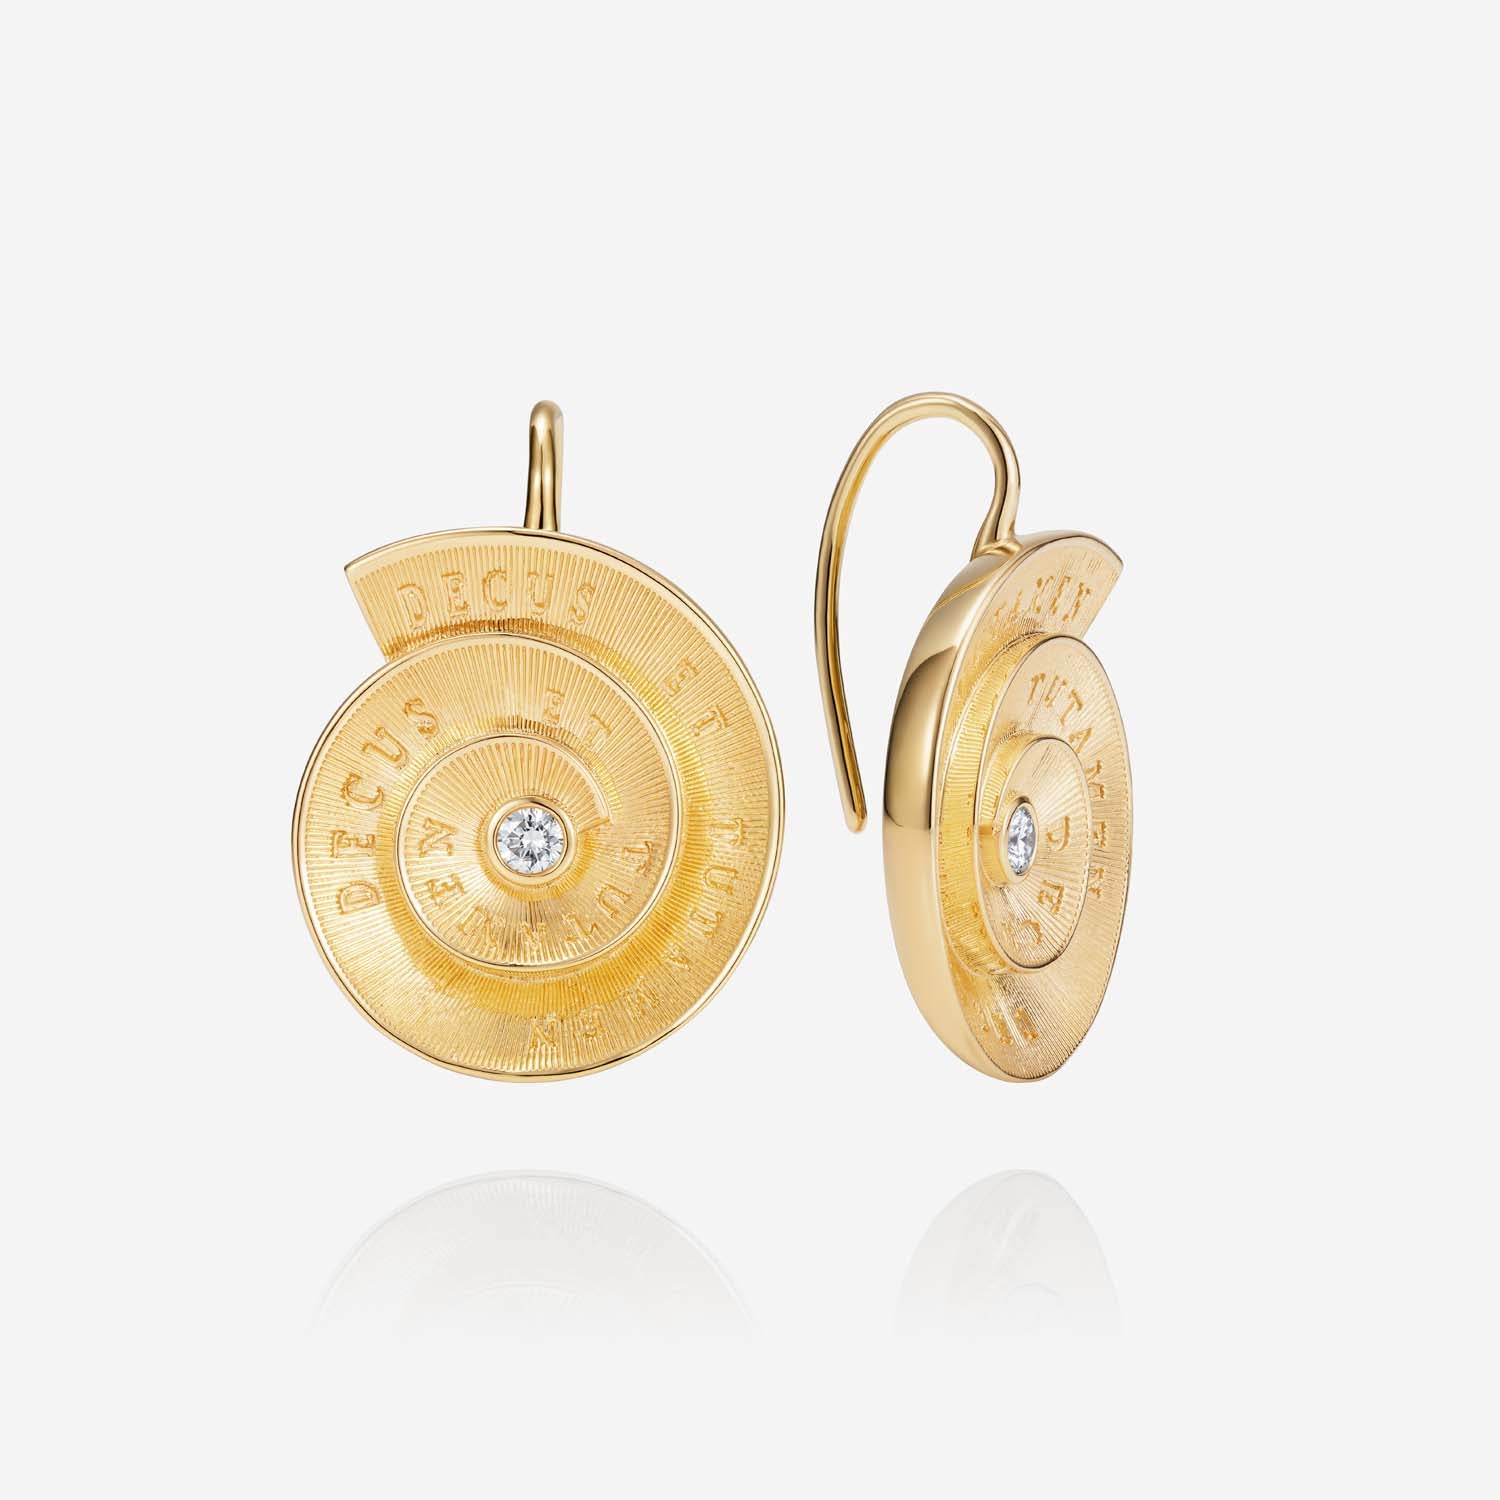 886 Royal Mint Earrings Tutamen Diamond Spiral Earrings 18ct Yellow Gold